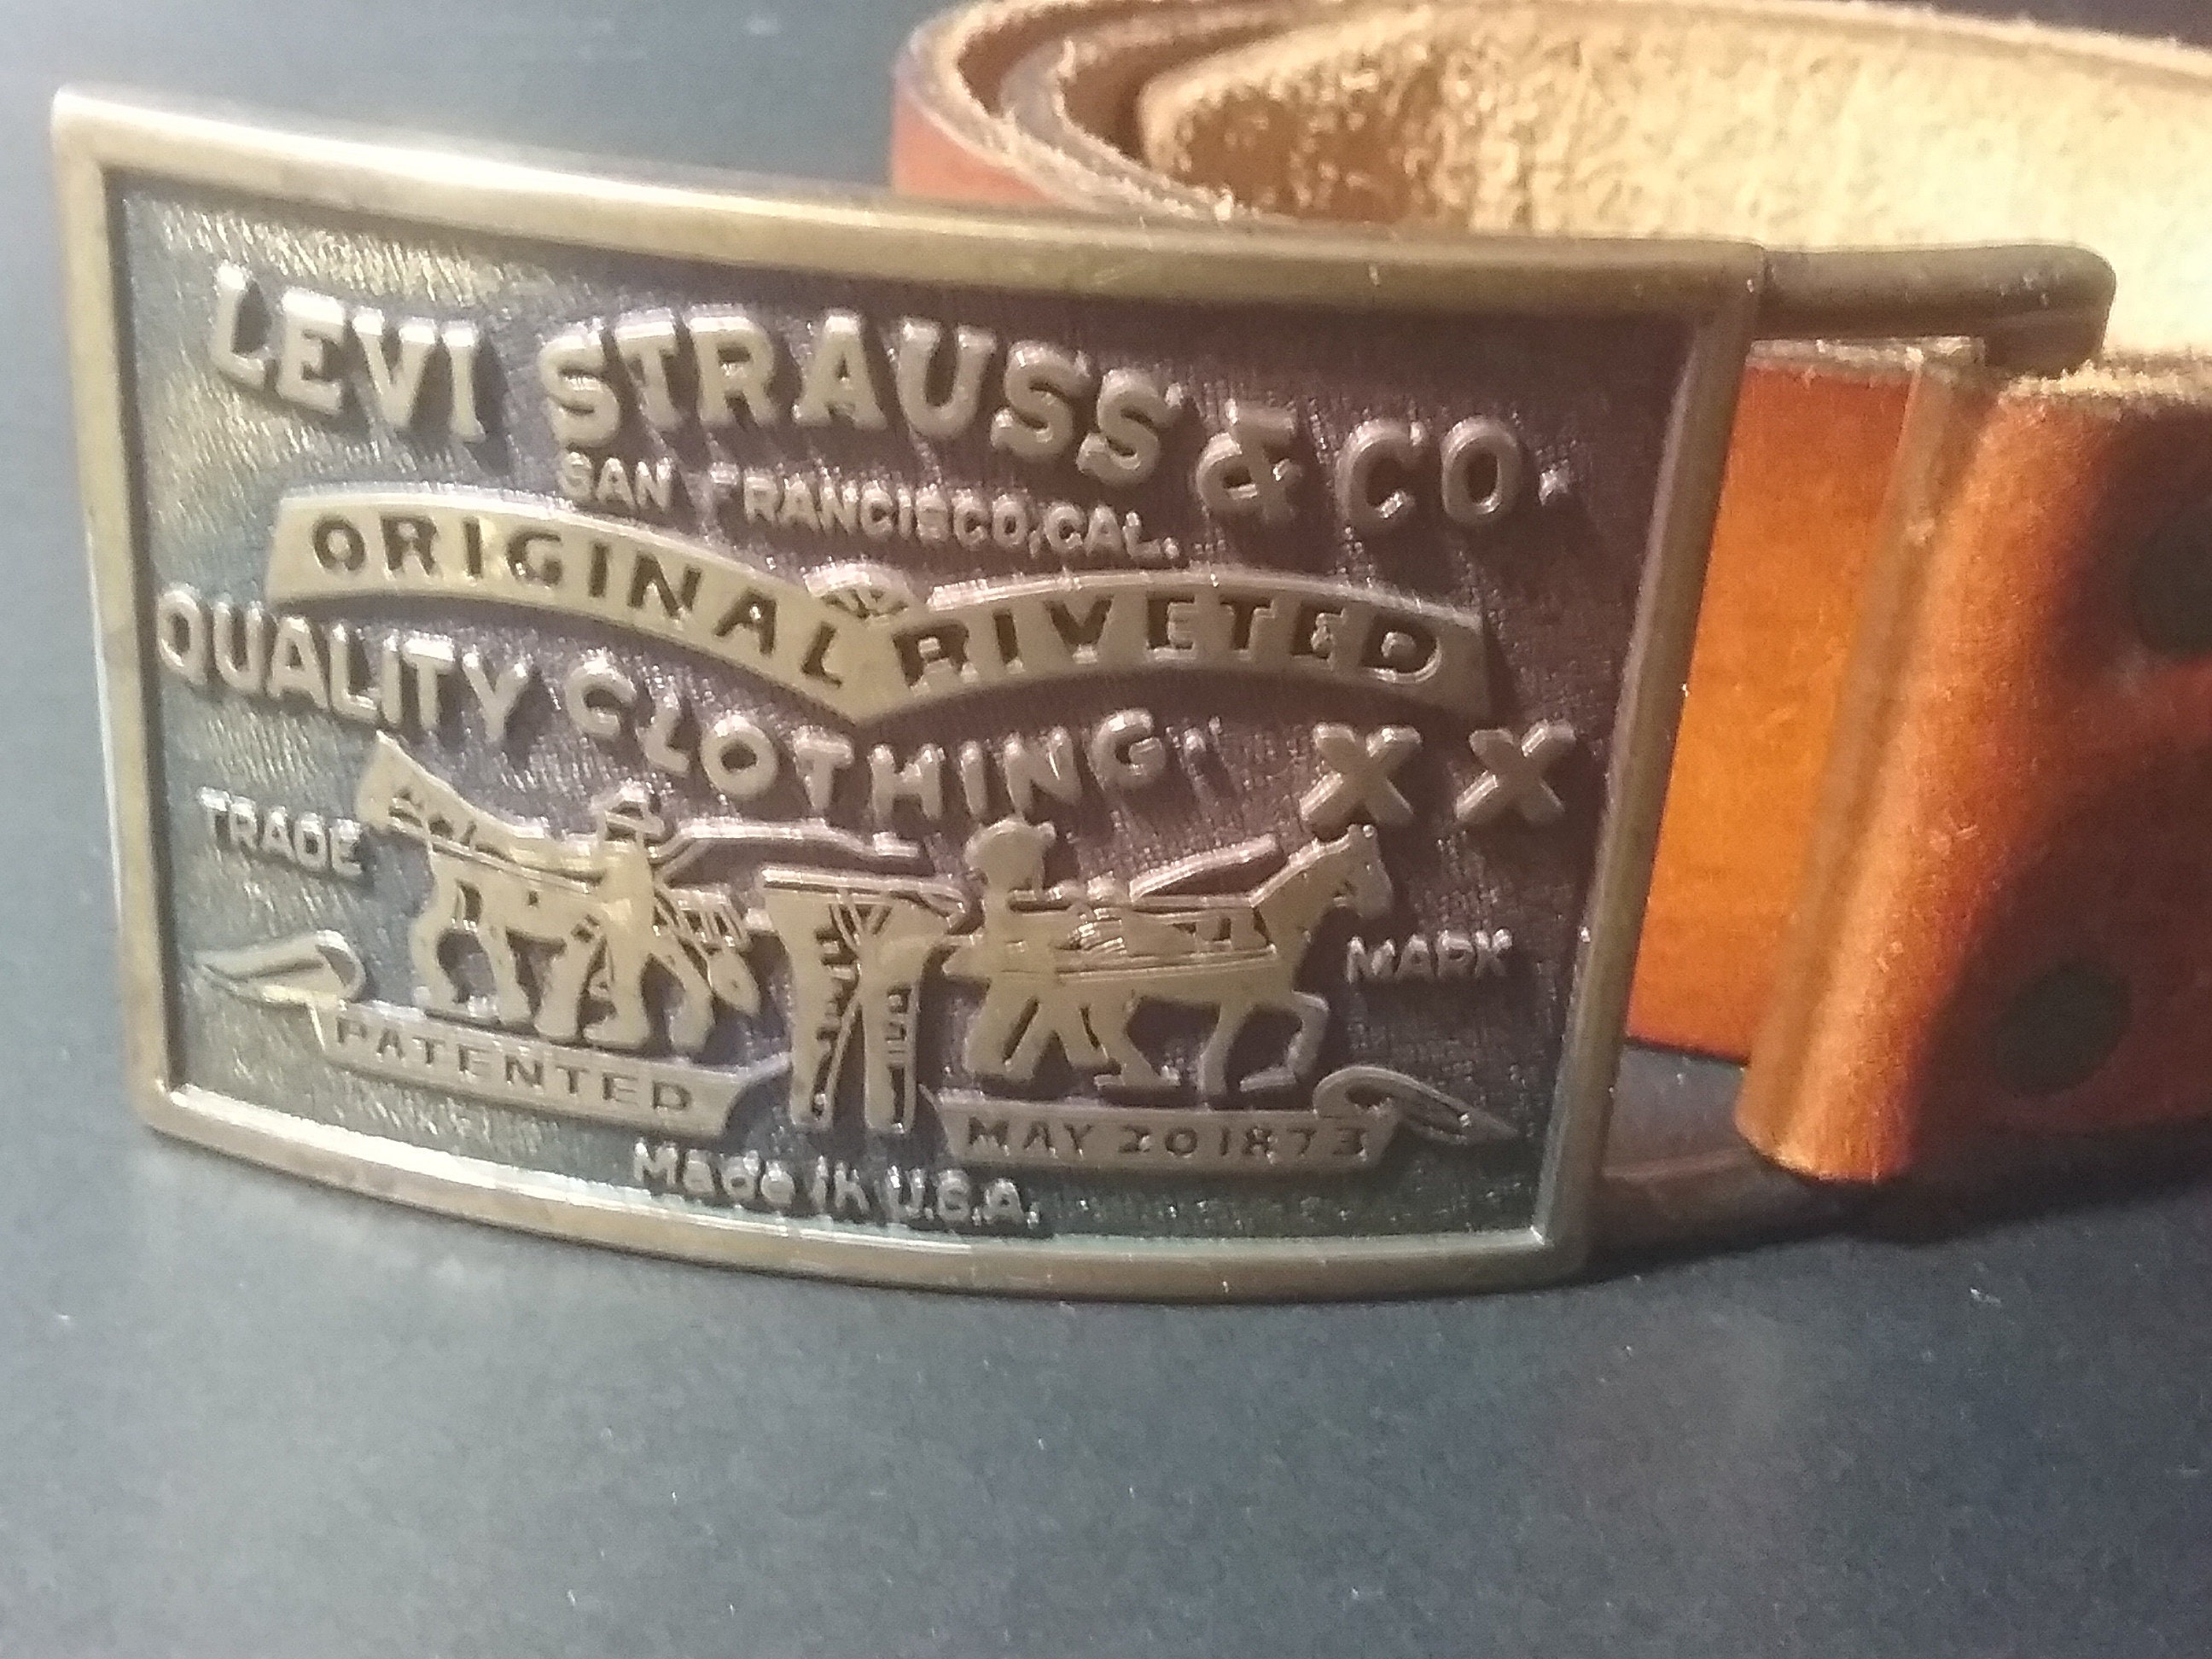 Vintage Levi's Belt and Buckle